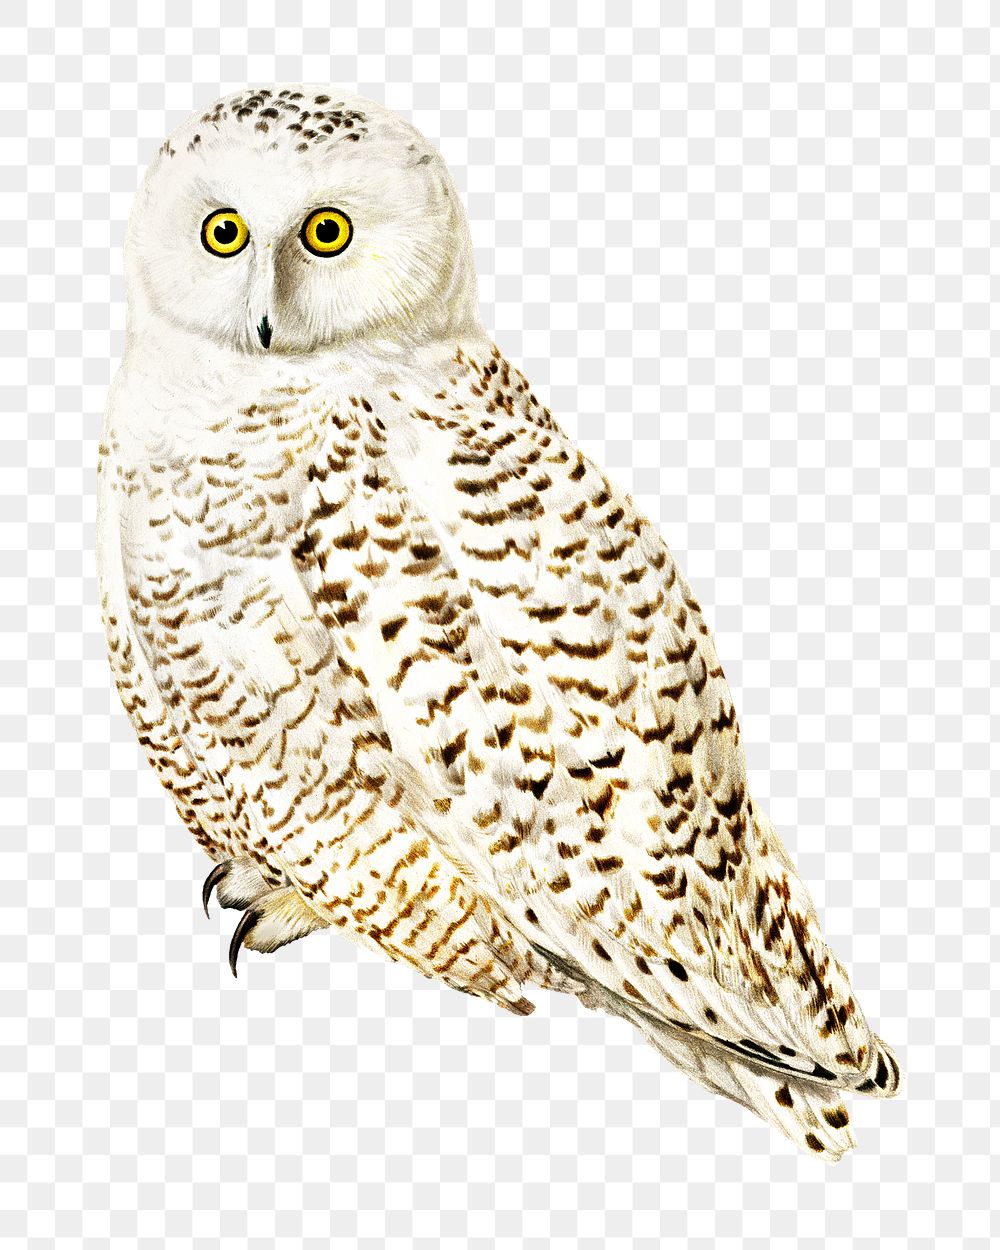 Snowy owl png bird sticker, transparent background